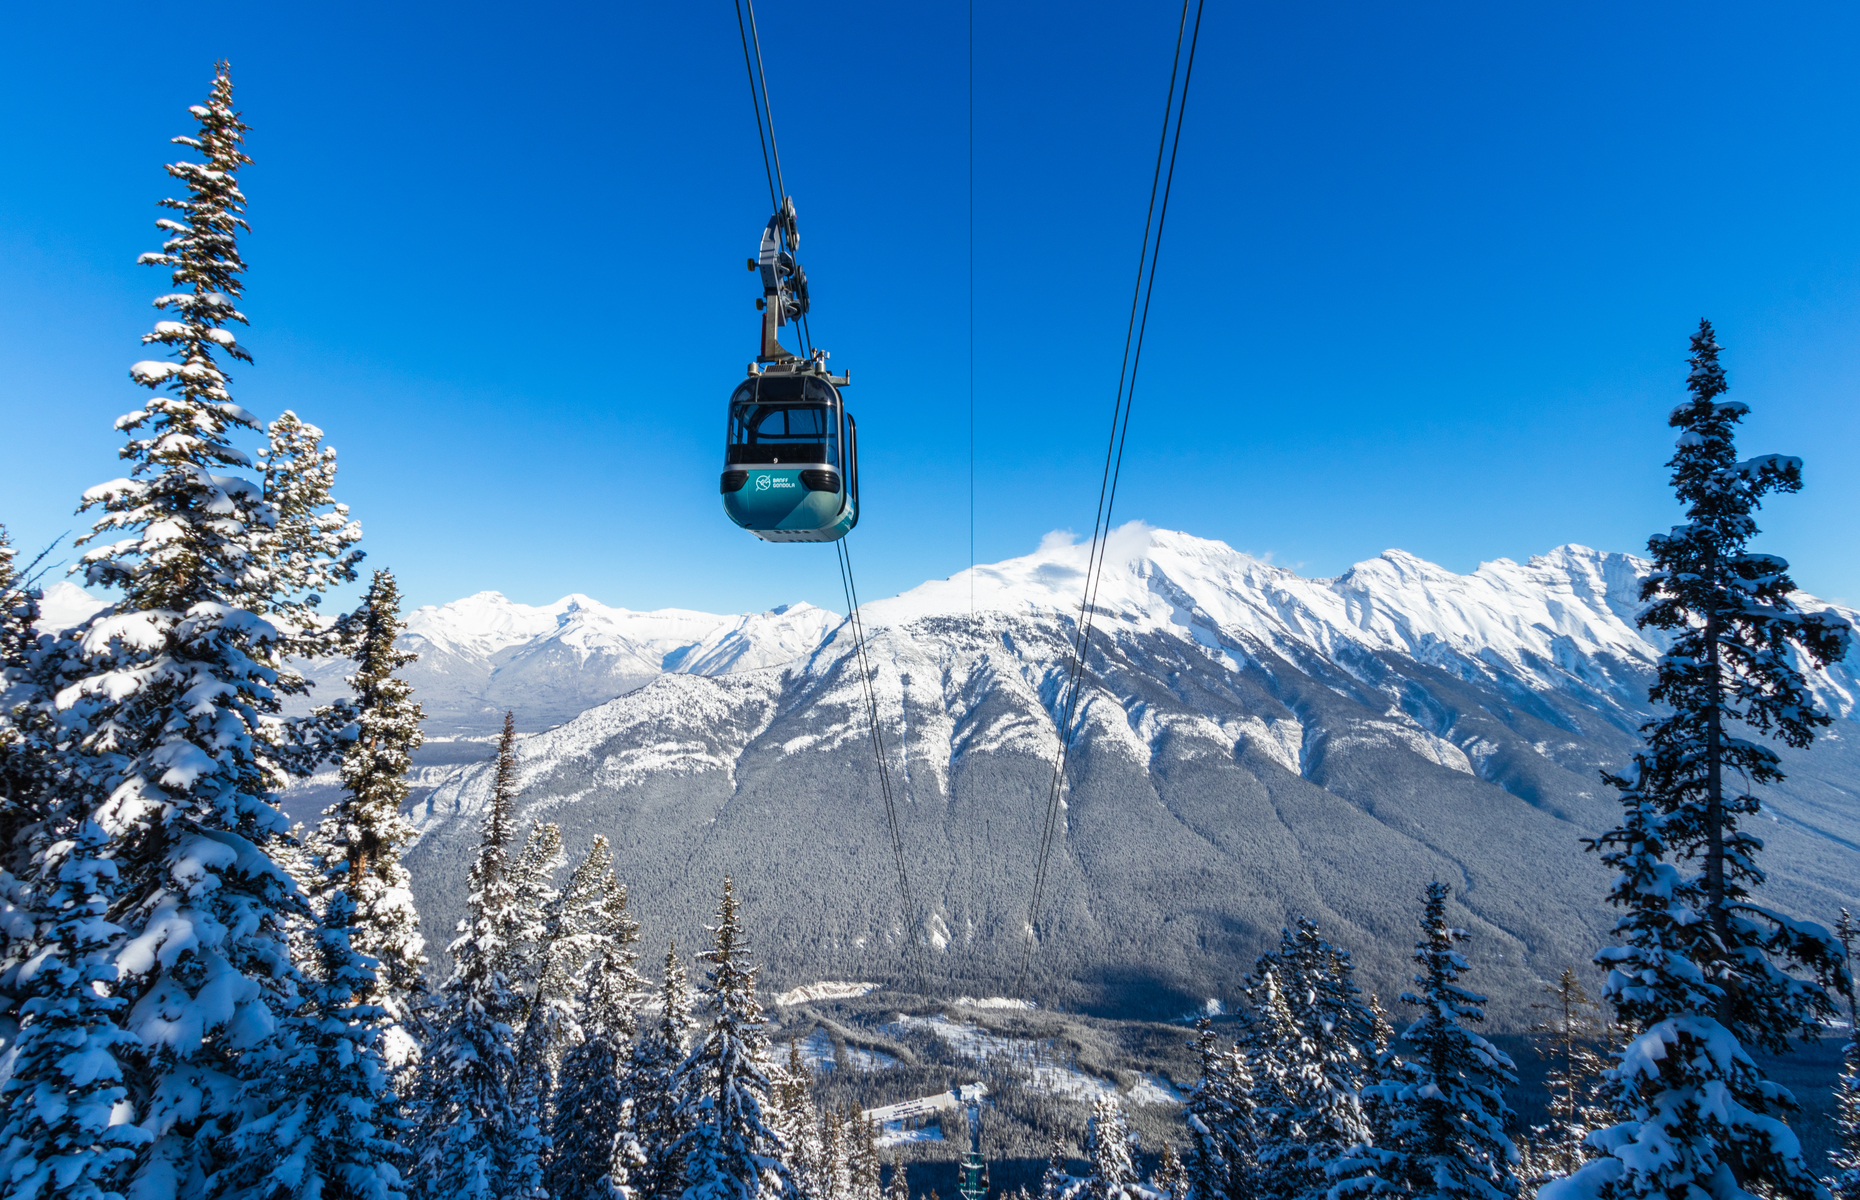 Banff Gondola (Image: Rybarmarekk/Shutterstock)